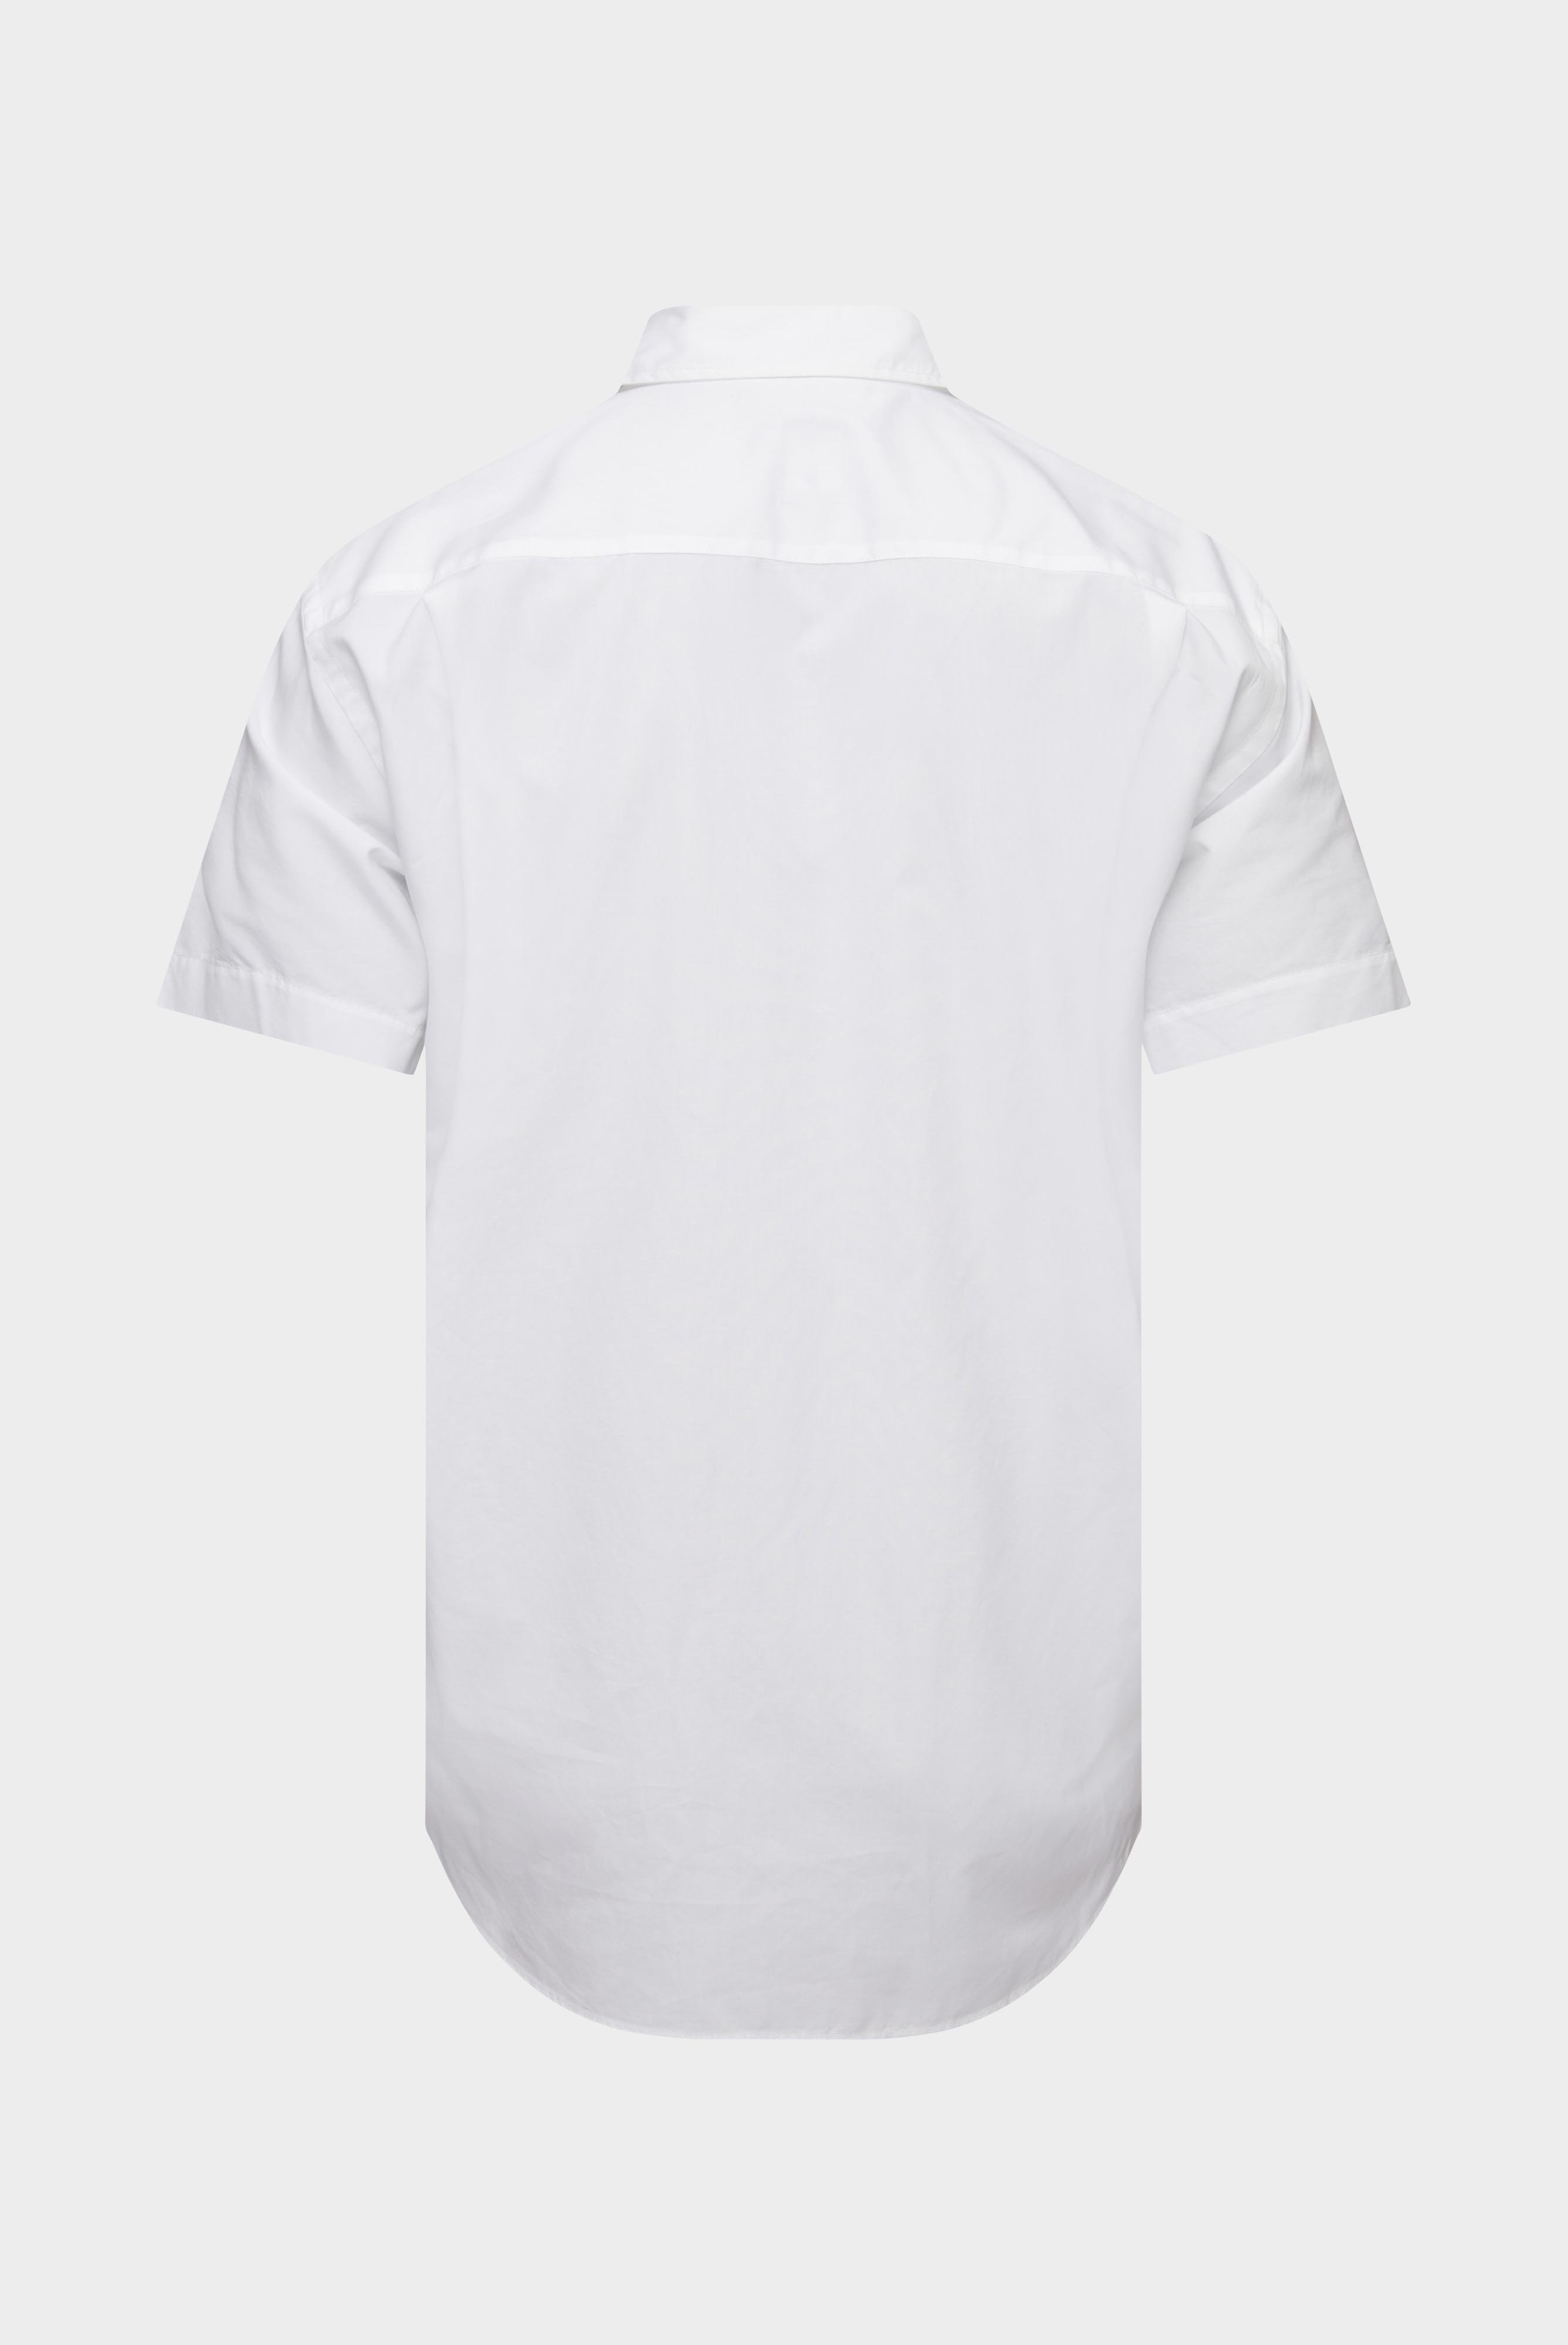 Casual Shirts+Short-sleeved shirt in dark cotton poplin+20.2056.Q2.130648.000.39